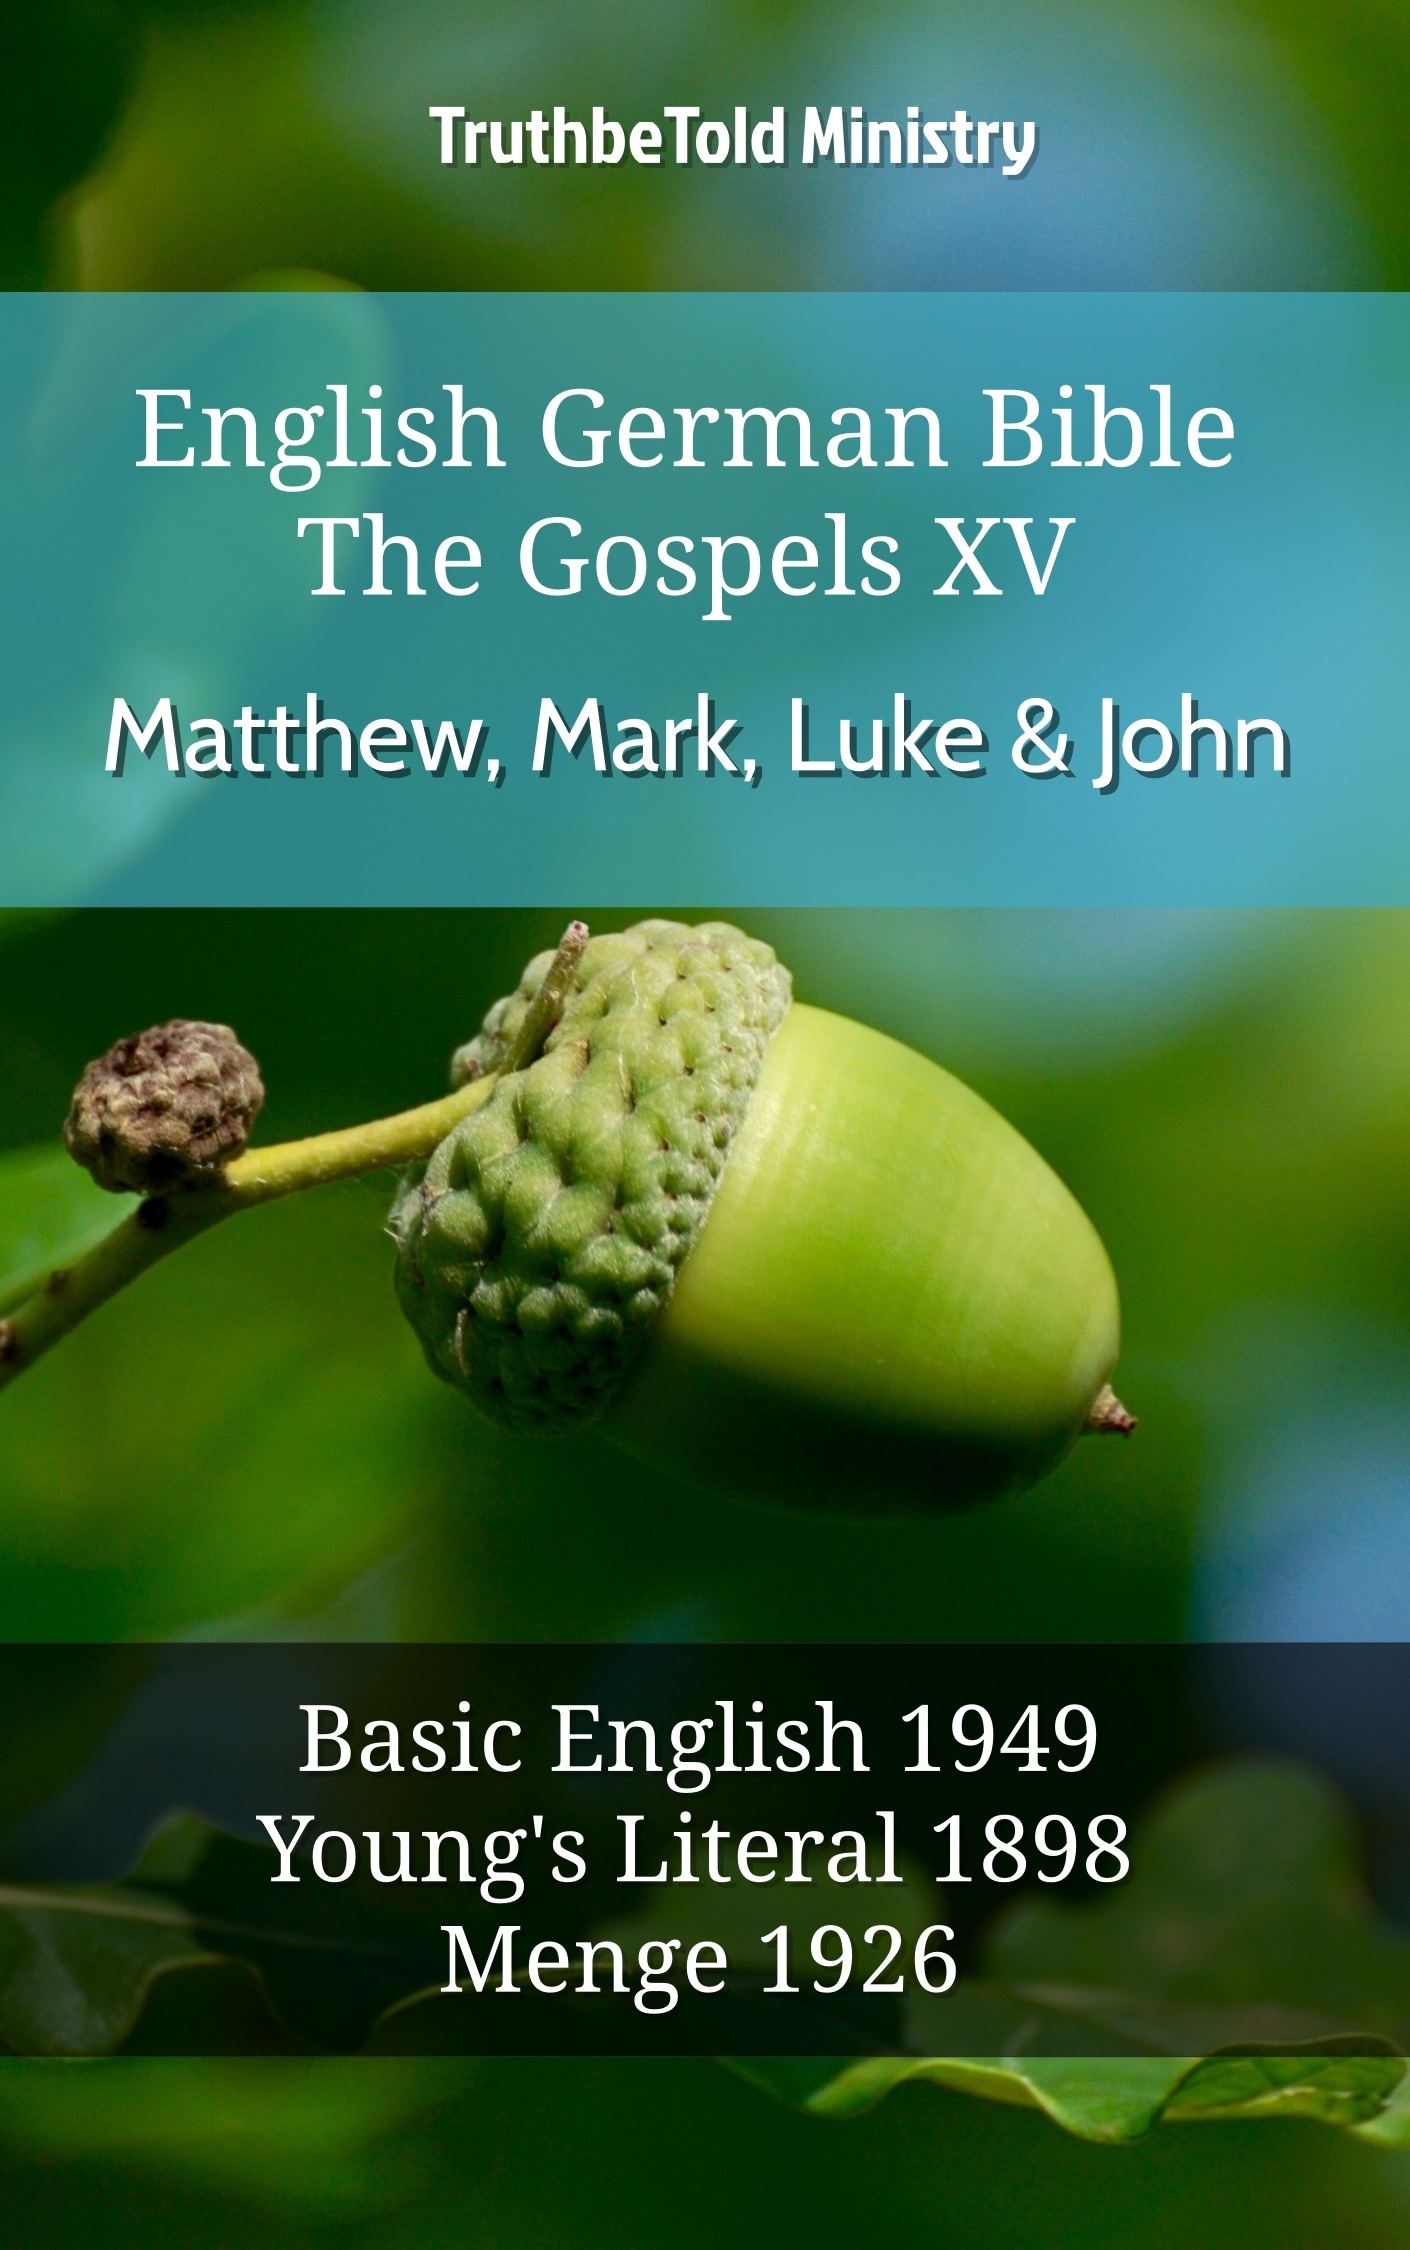 English German Bible - The Gospels XIV - Matthew, Mark, Luke & John